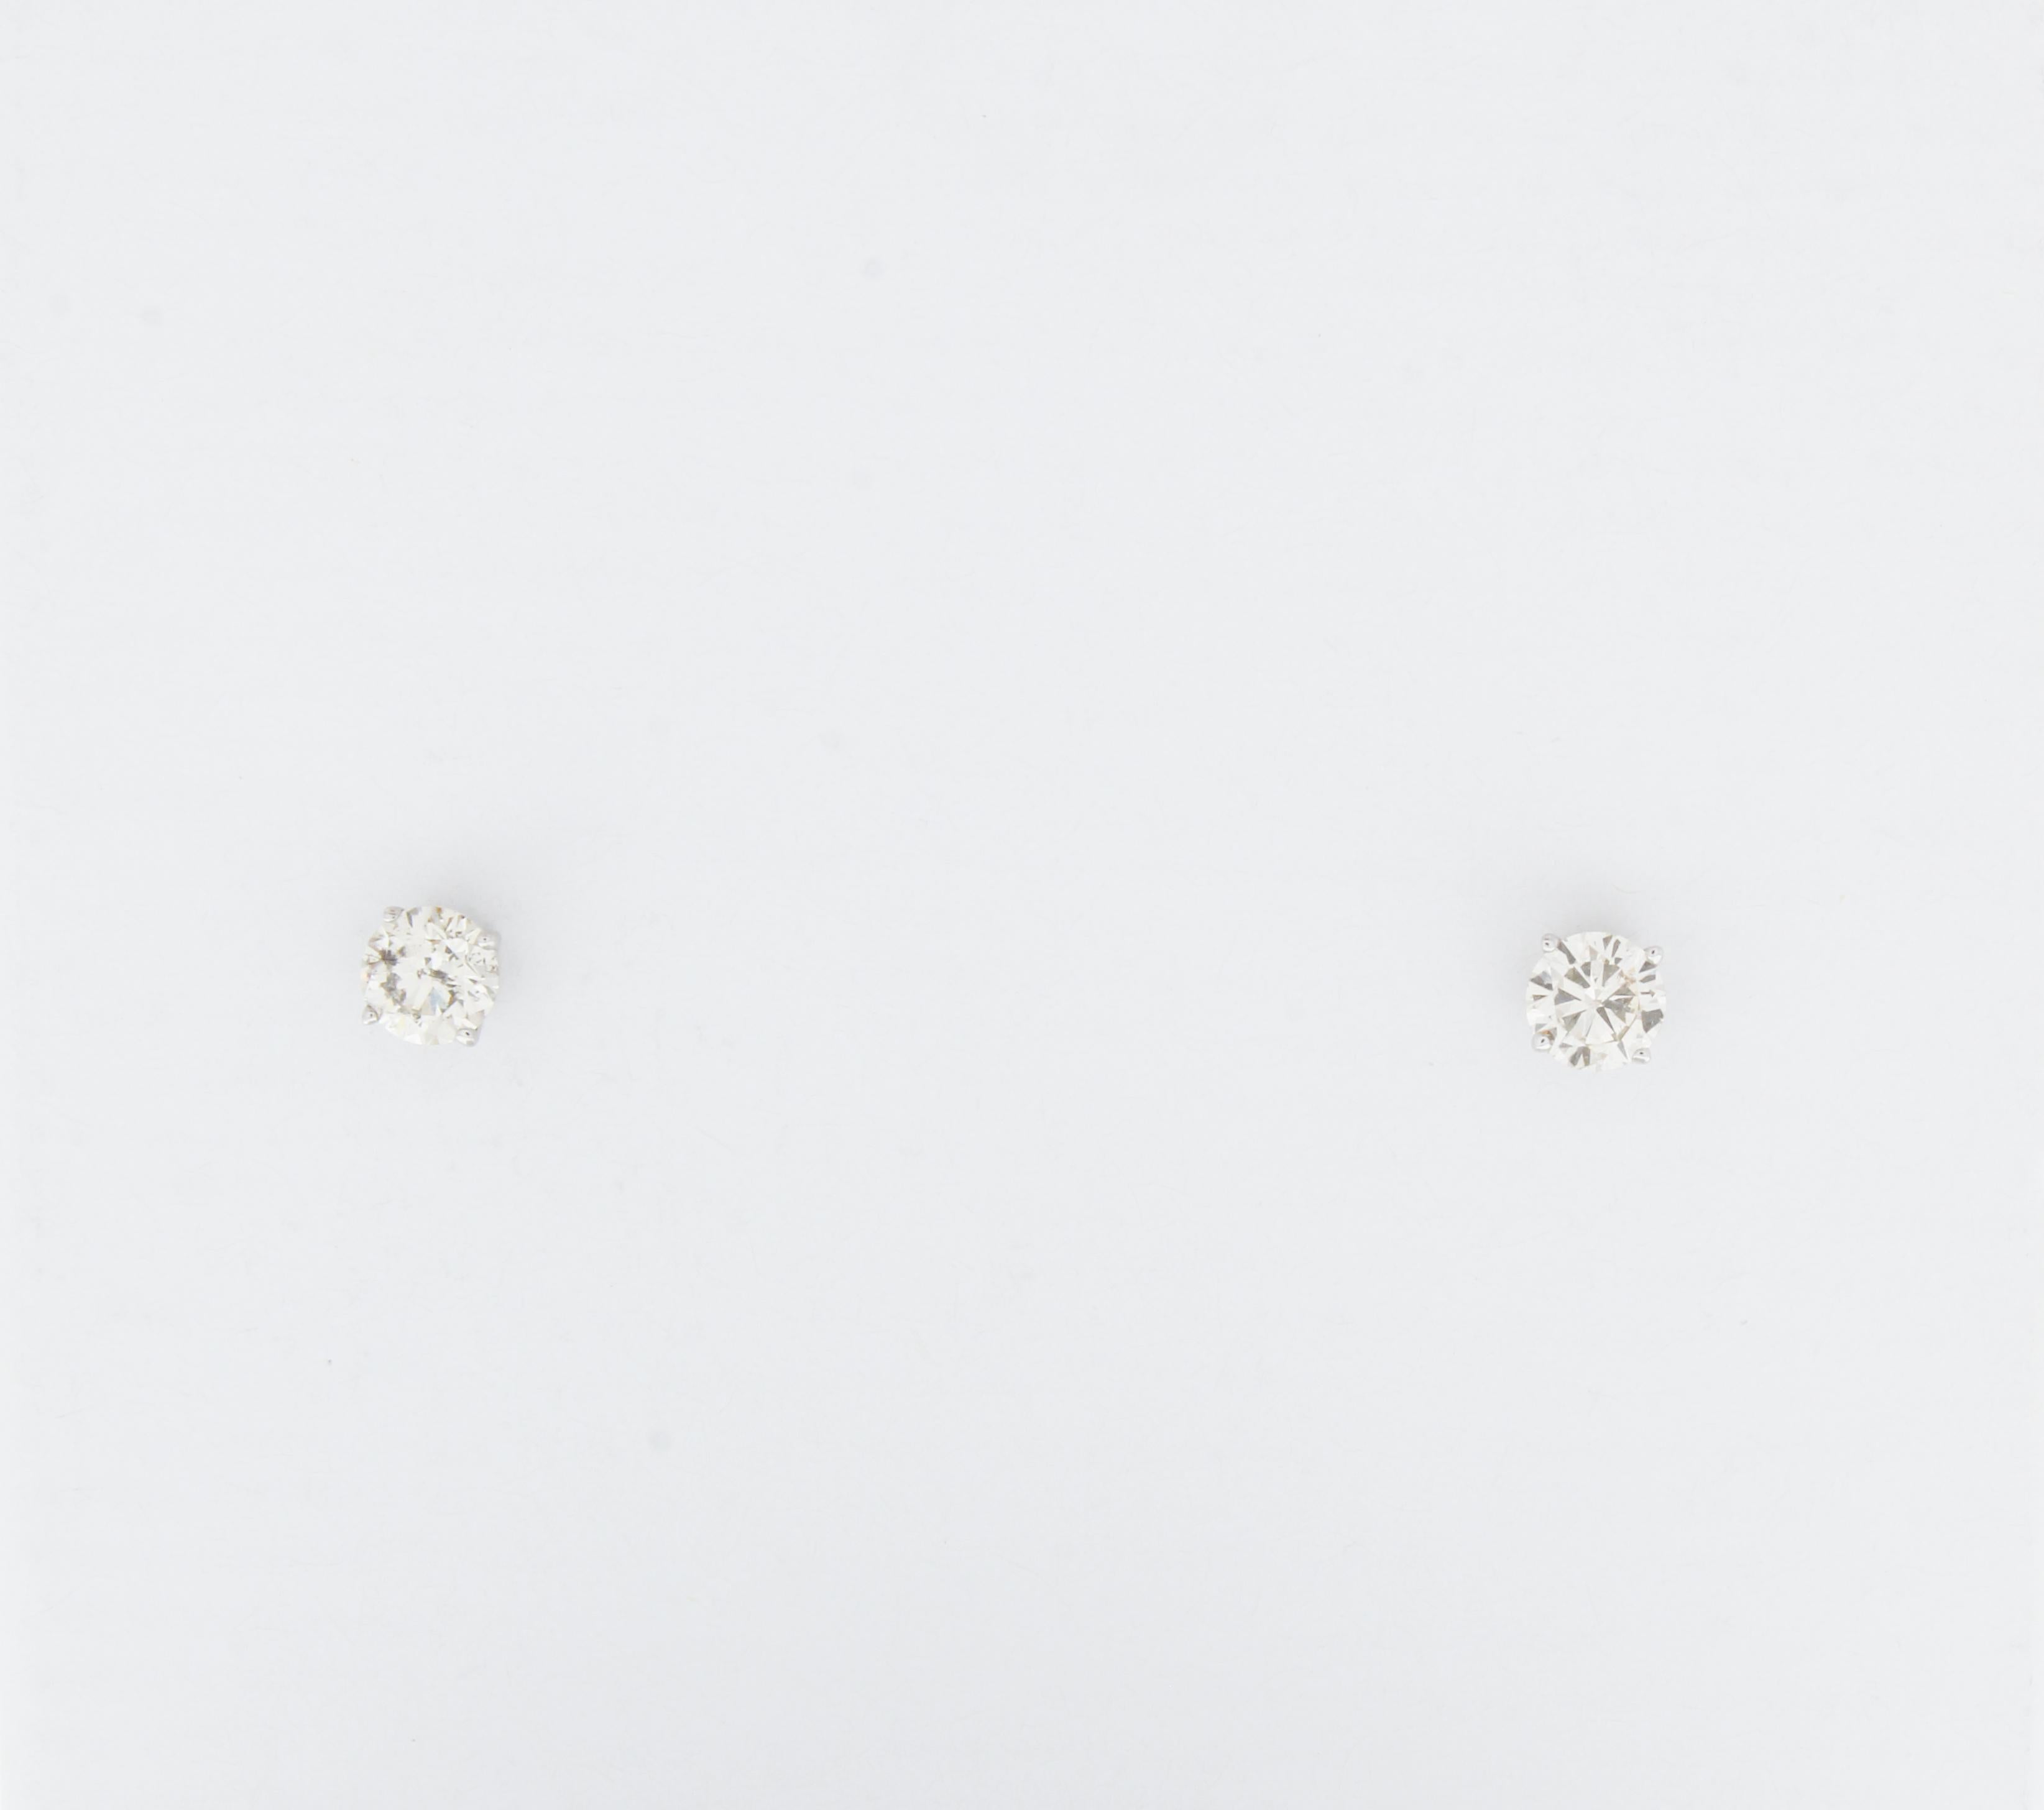 .33 carat diamond earrings